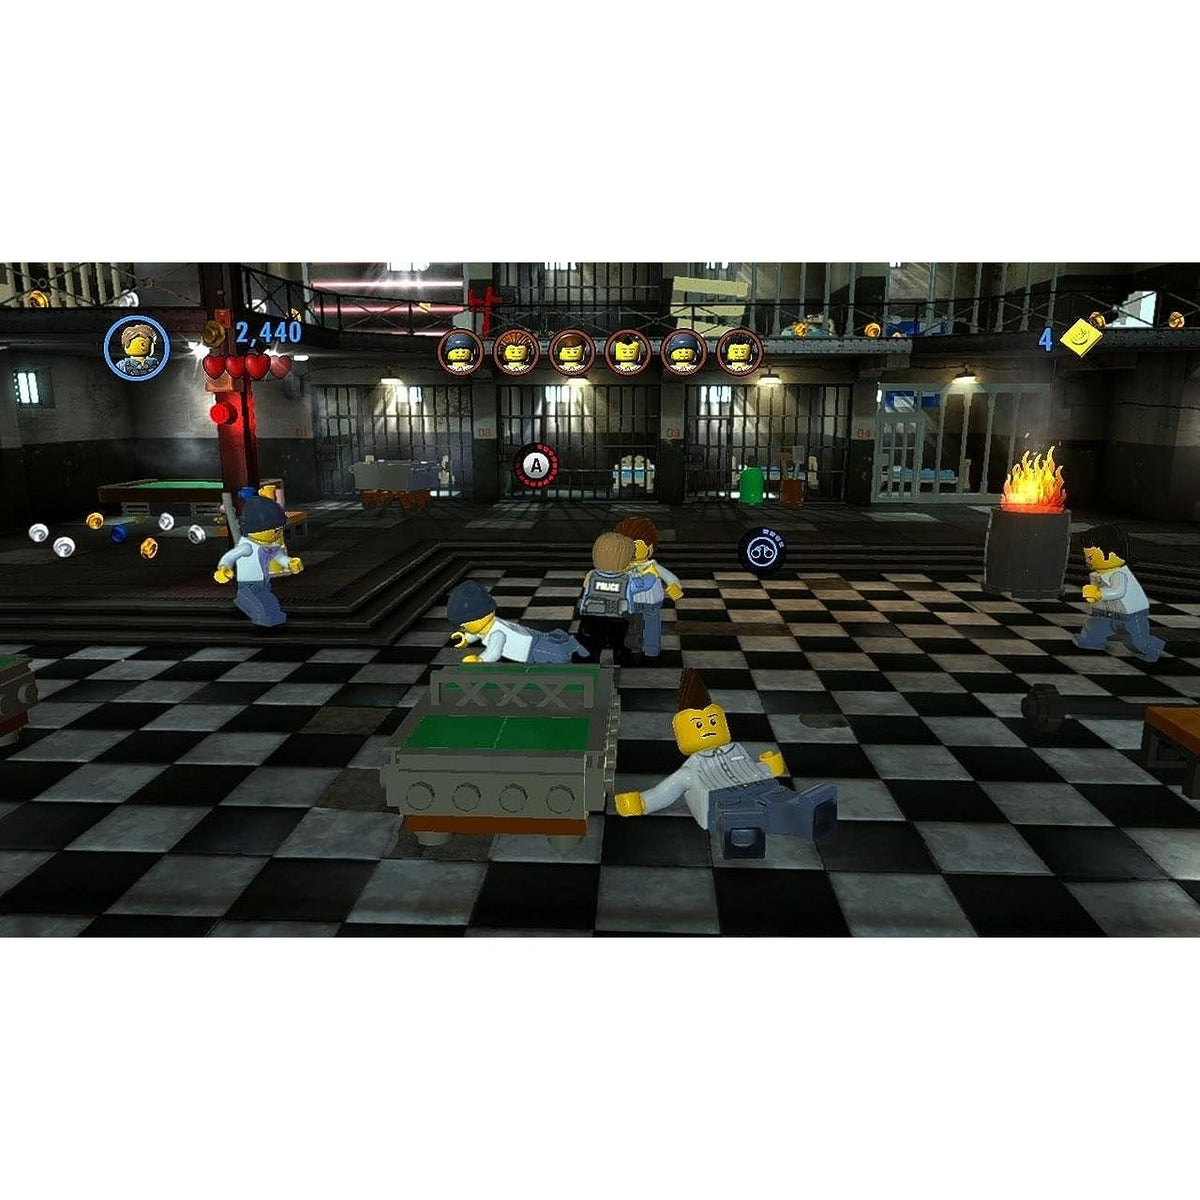 LEGO City Undercover Sony Playstation 4